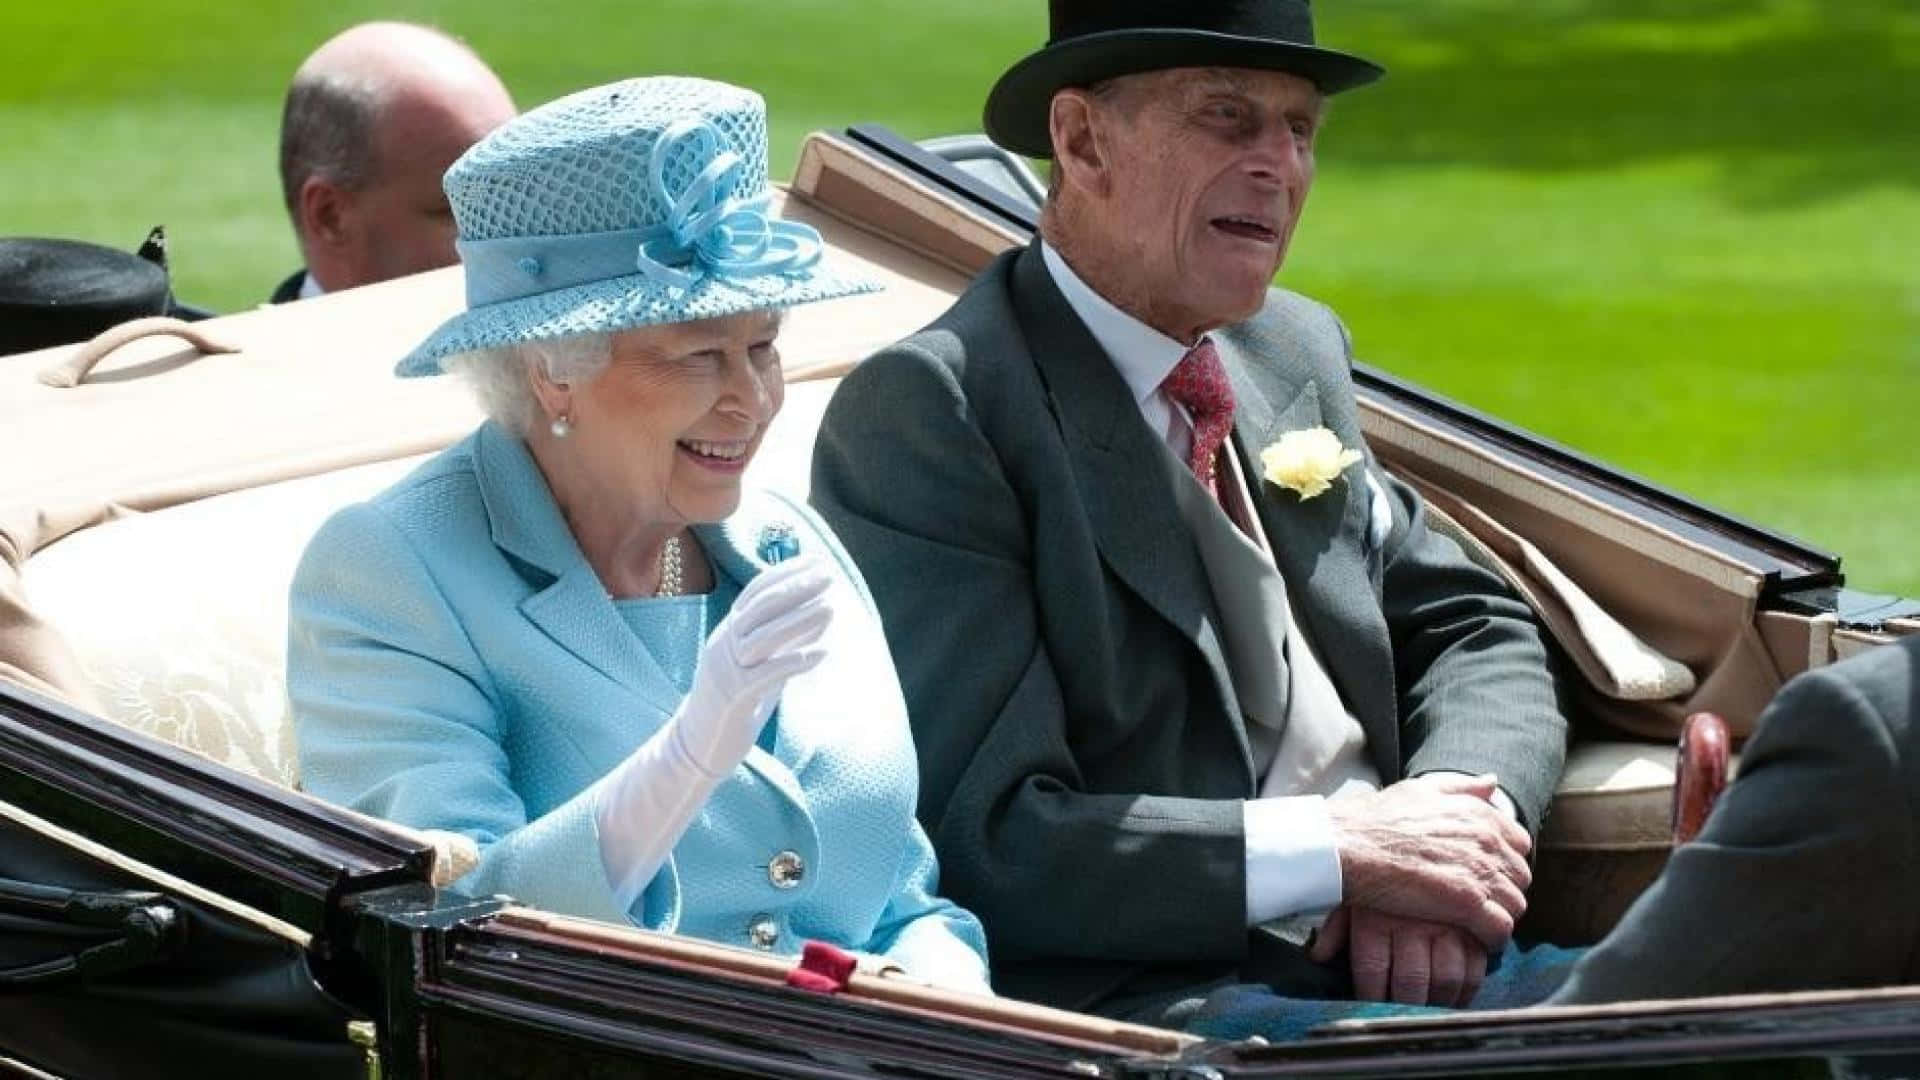 Queen Elizabeth II in a Regal Pose